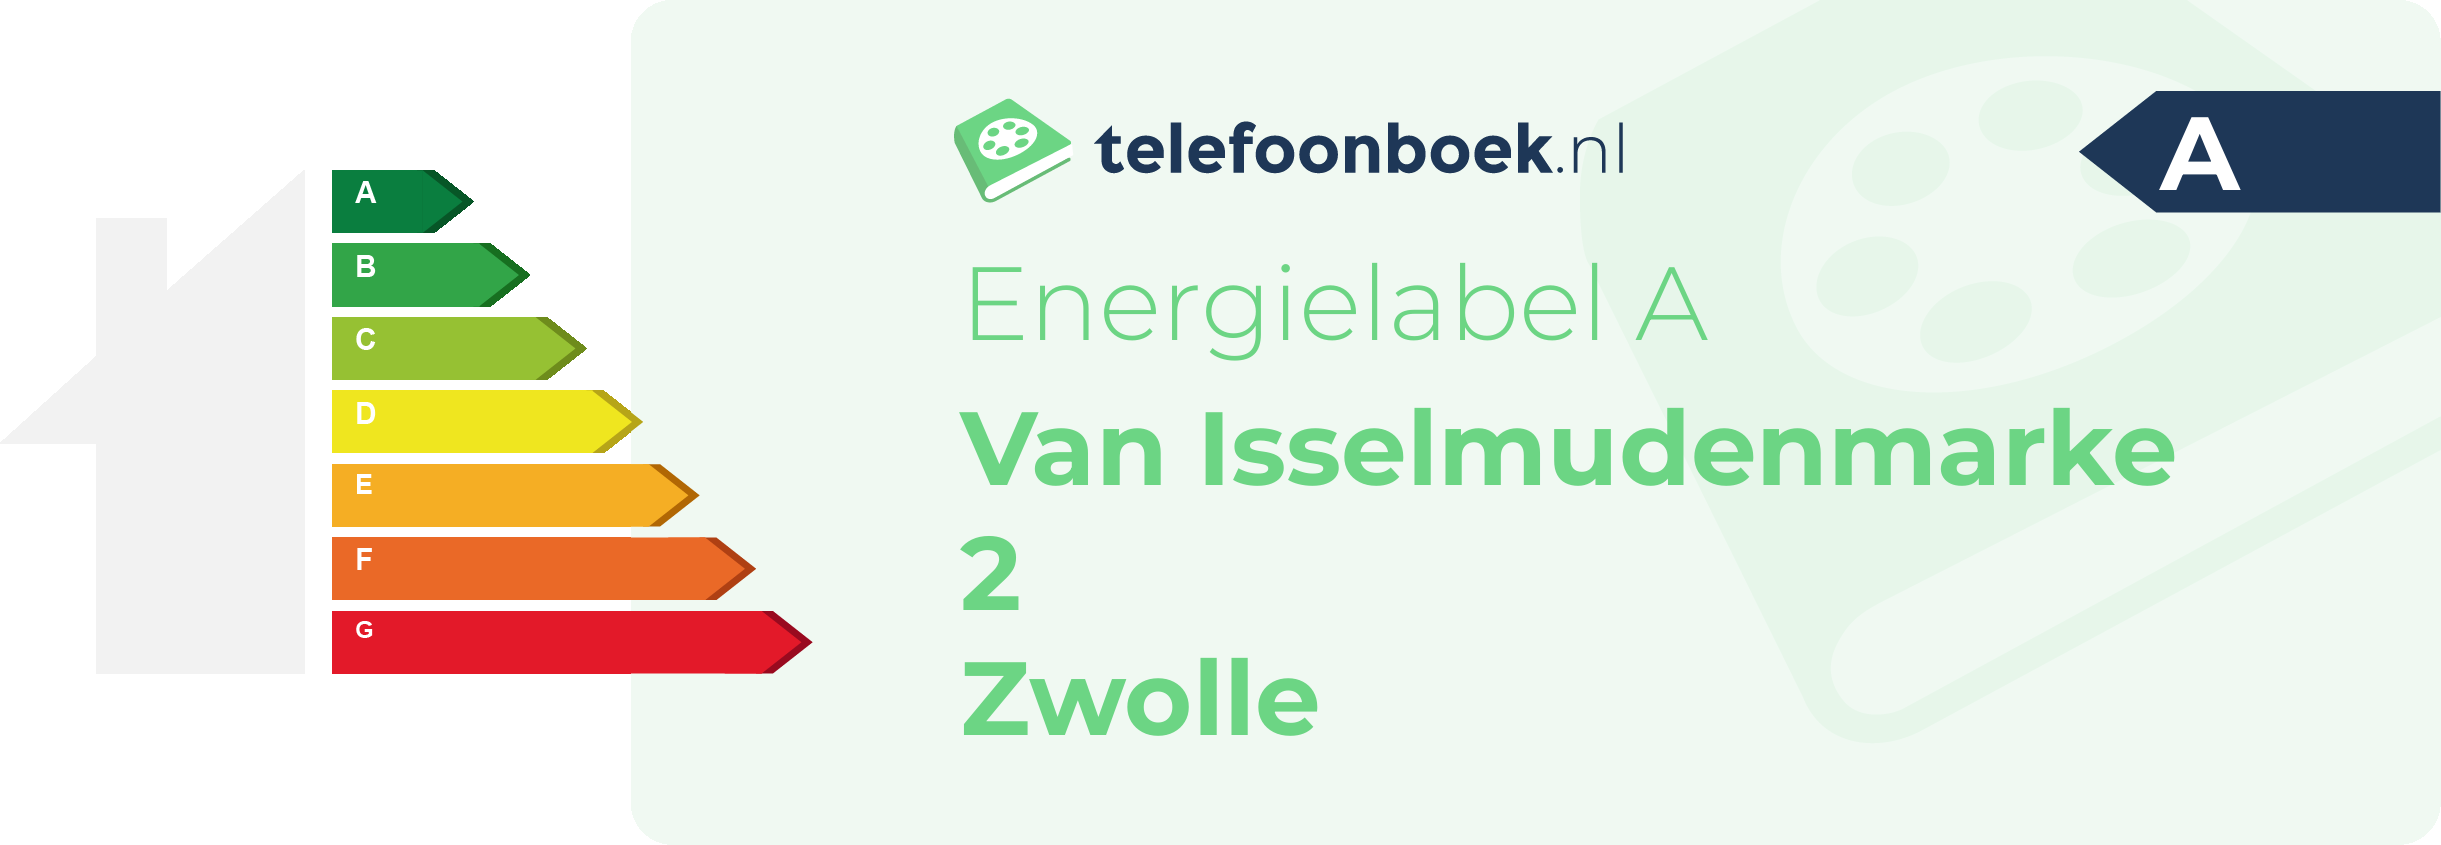 Energielabel Van Isselmudenmarke 2 Zwolle